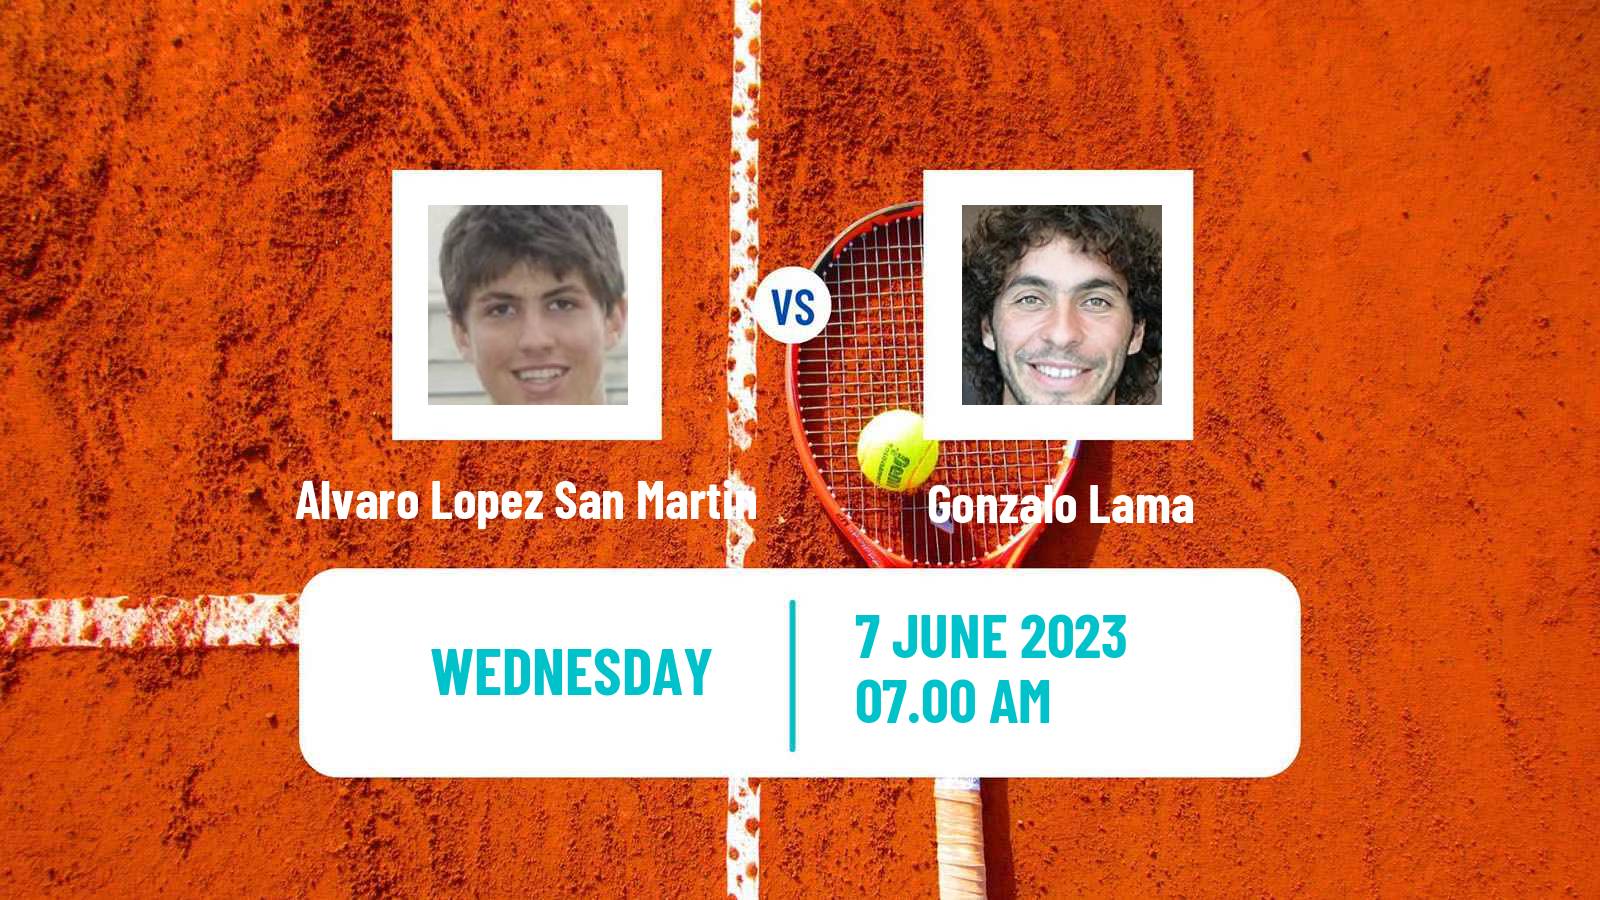 Tennis ITF M25 Cordoba Men Alvaro Lopez San Martin - Gonzalo Lama